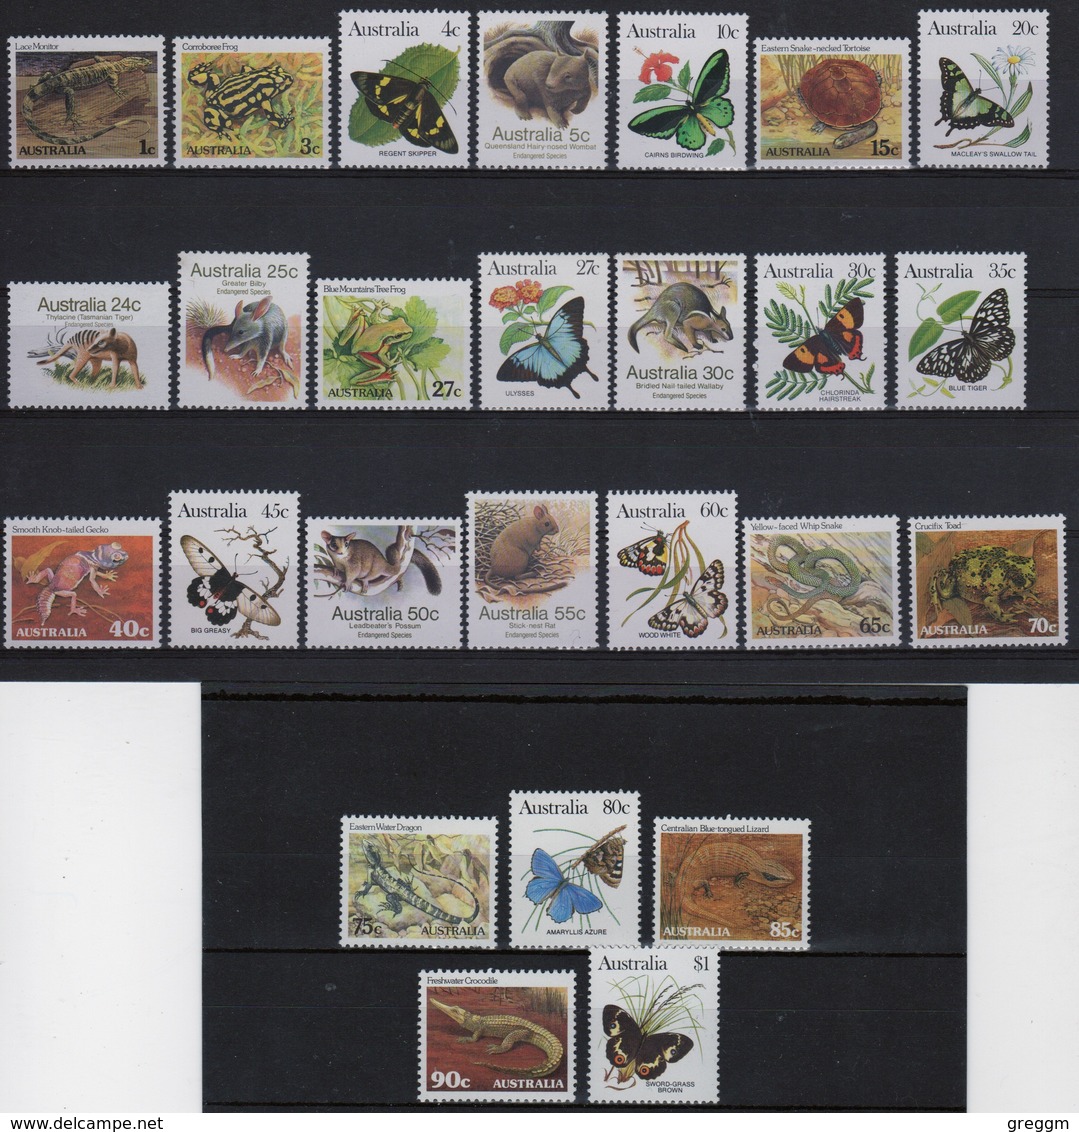 Australia 1981 Set Of Stamps To Celebrate Wildlife. - Mint Stamps